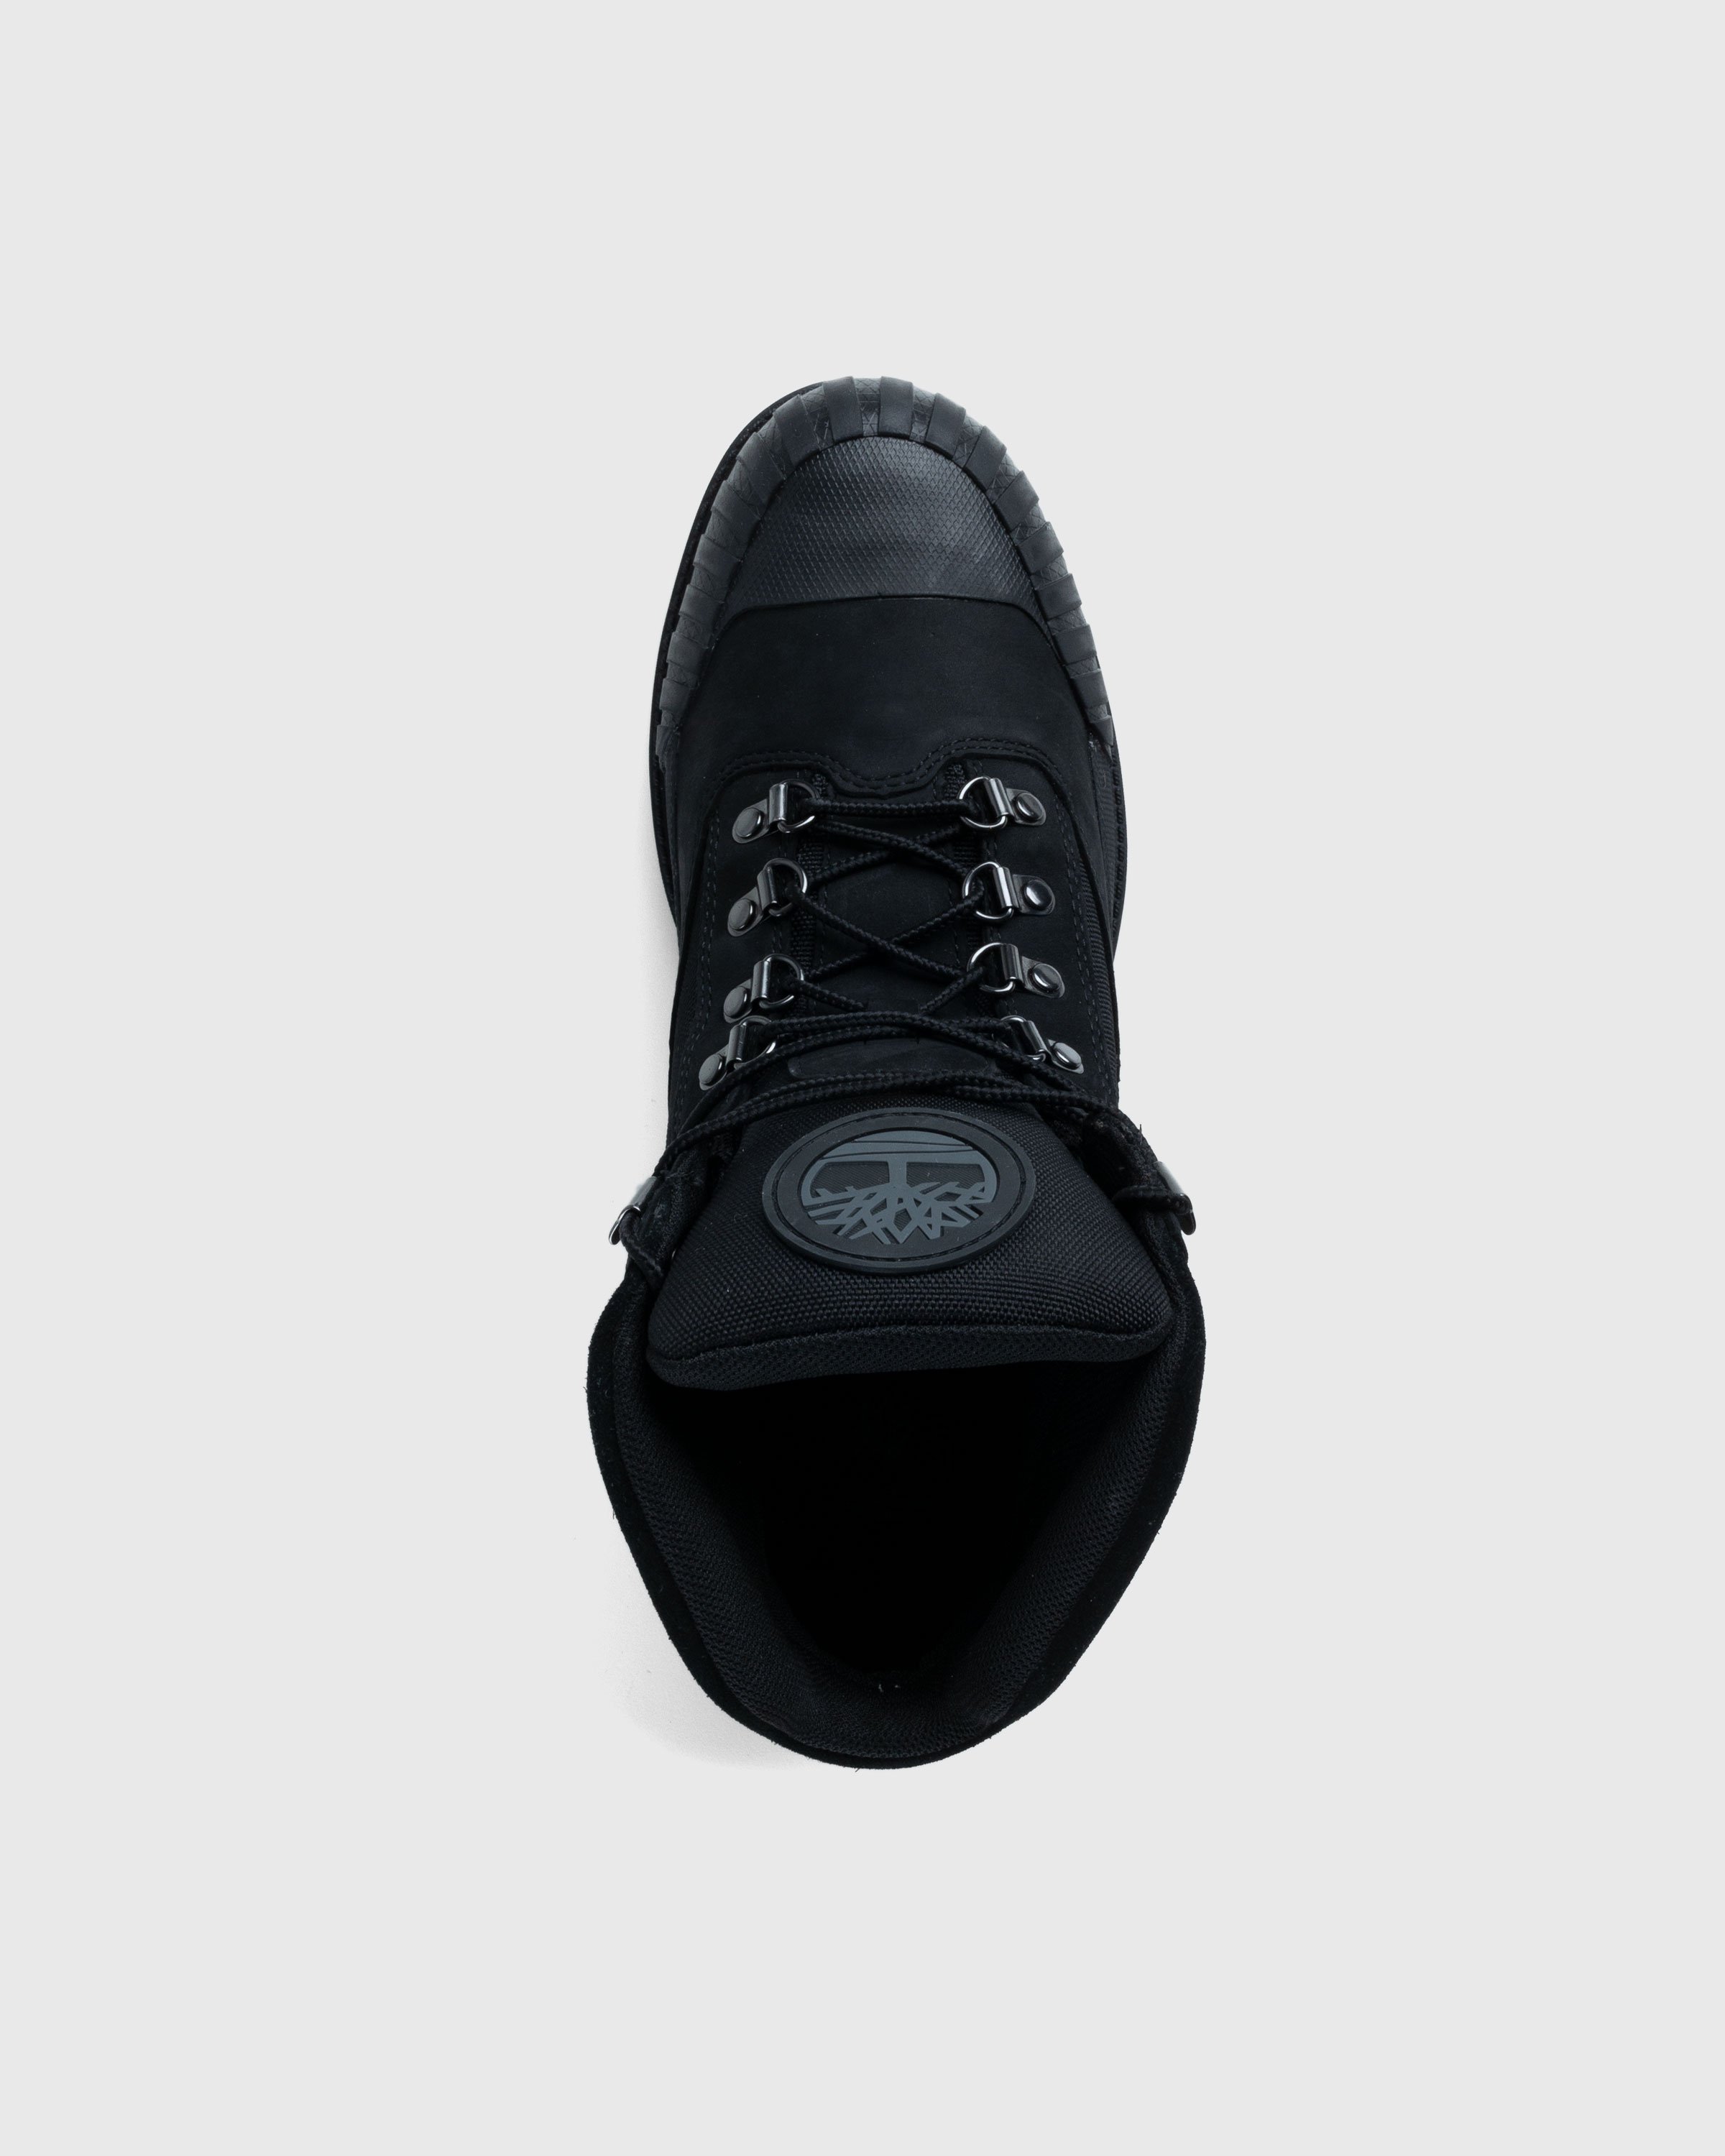 Timberland - Heritage Rubber Toe Hiker Black - Footwear - Black - Image 3